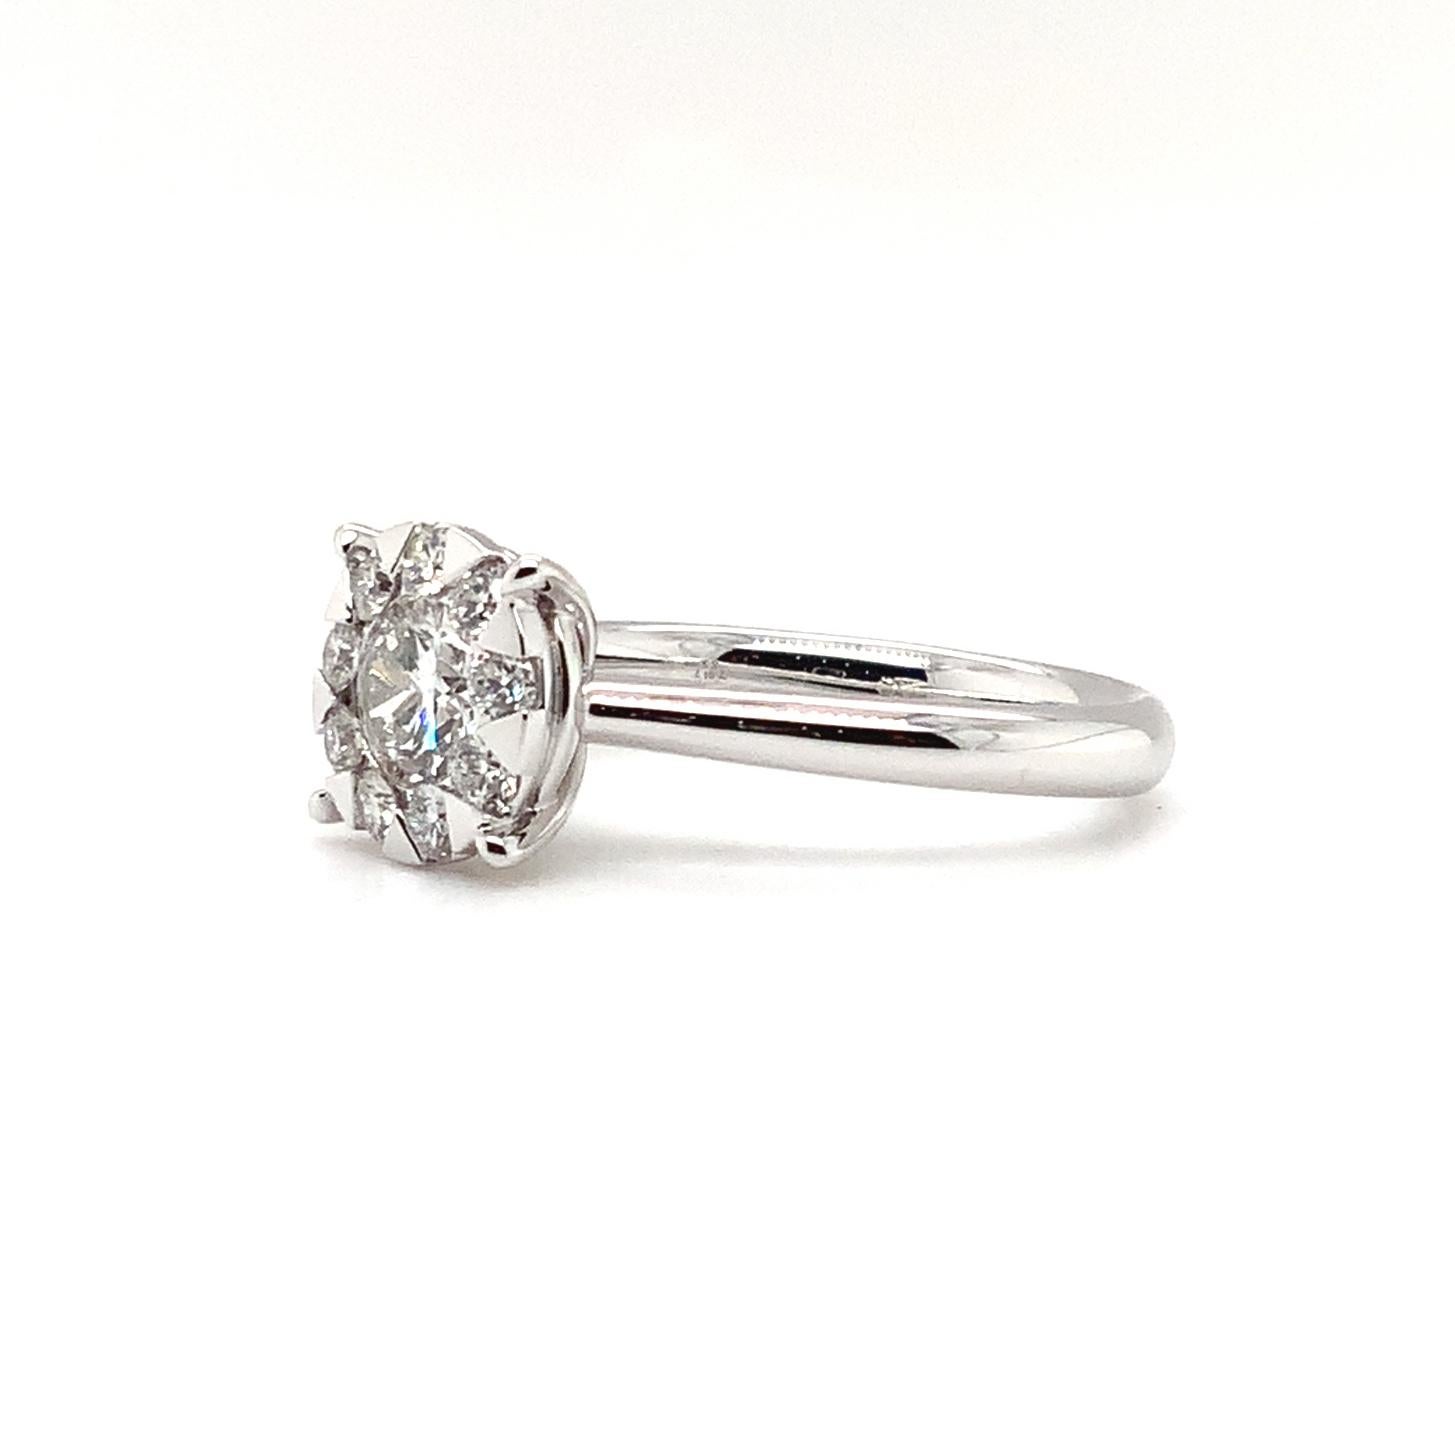 Brilliant Cut Memoire Bouquets Collection Engagement Diamond Ring 0.87ctw Looks like a 3 Car For Sale